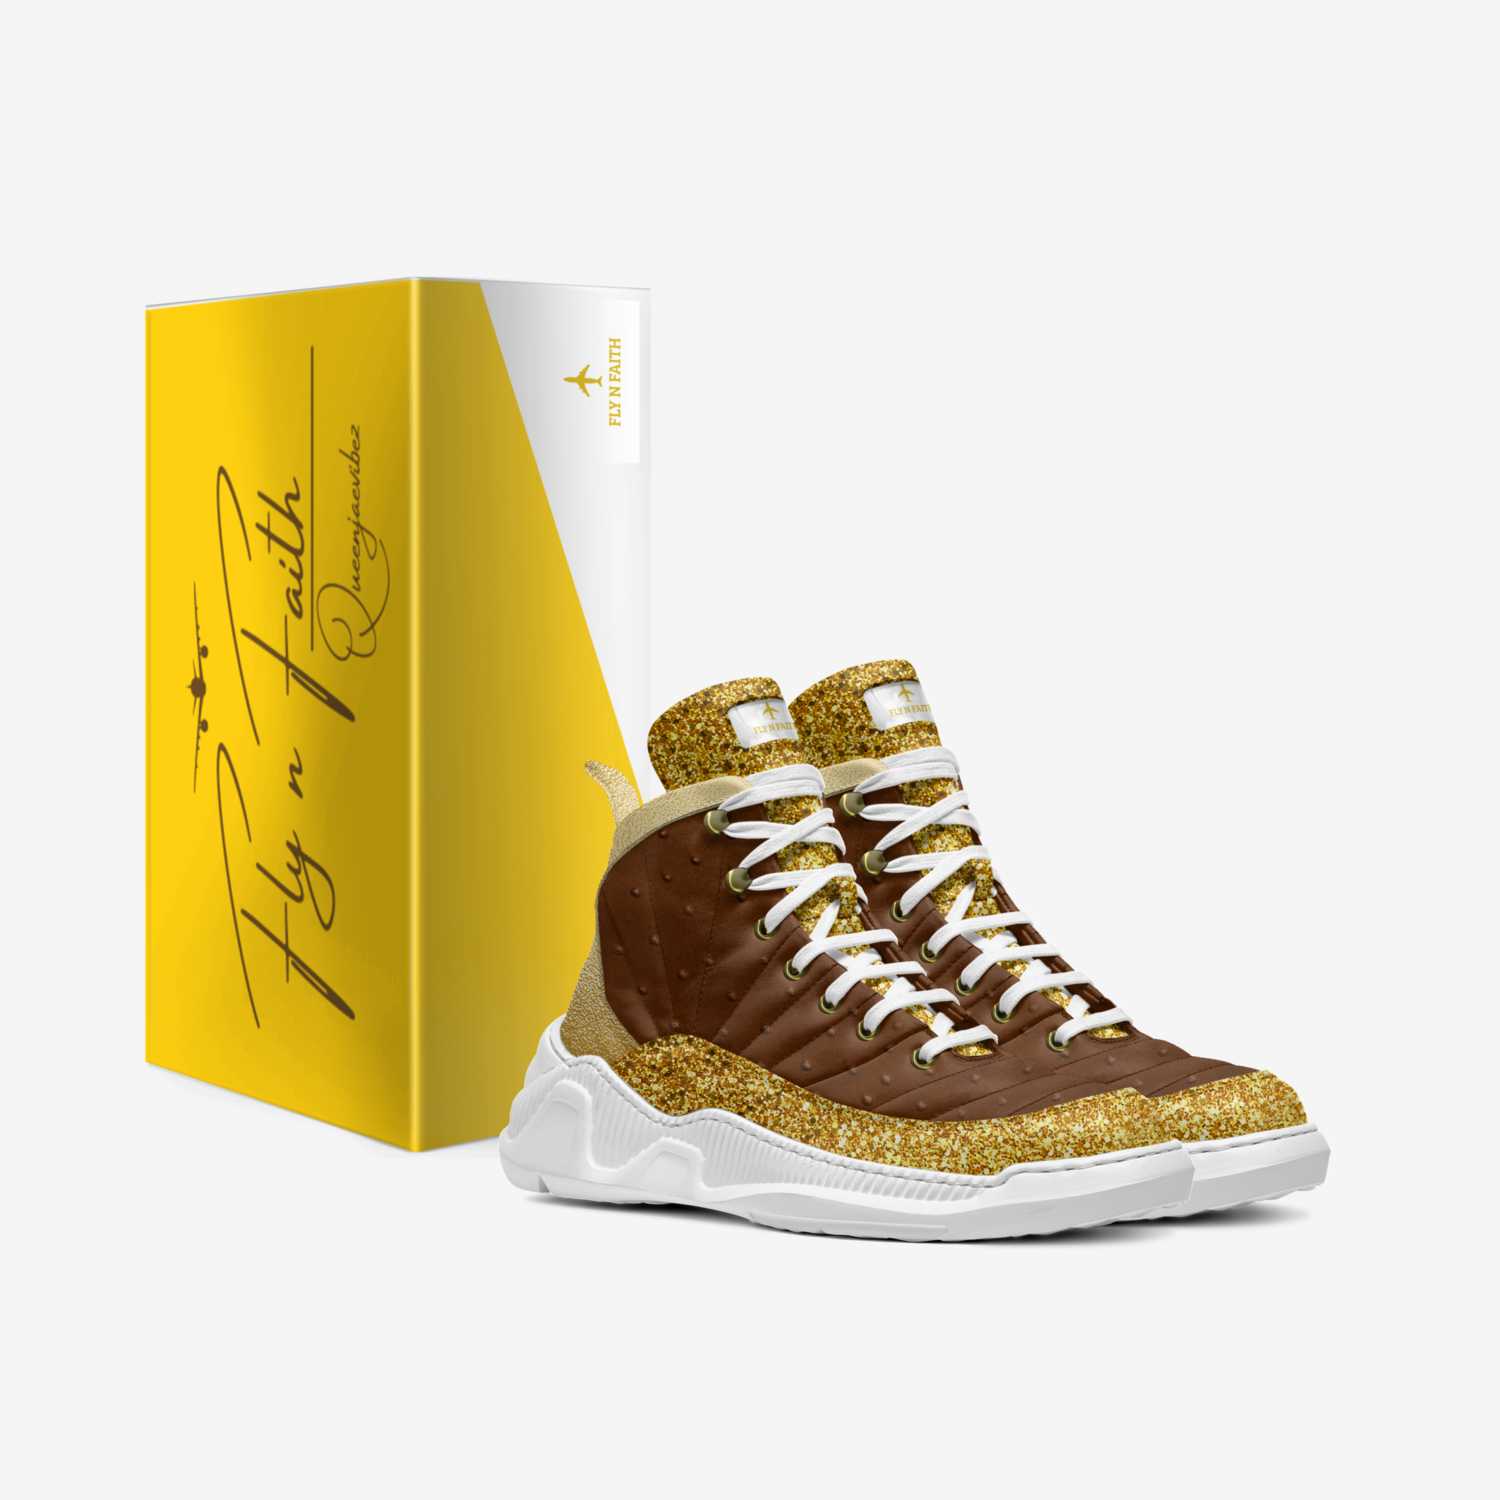 Fly N Faith custom made in Italy shoes by Jocelyn Joe | Box view